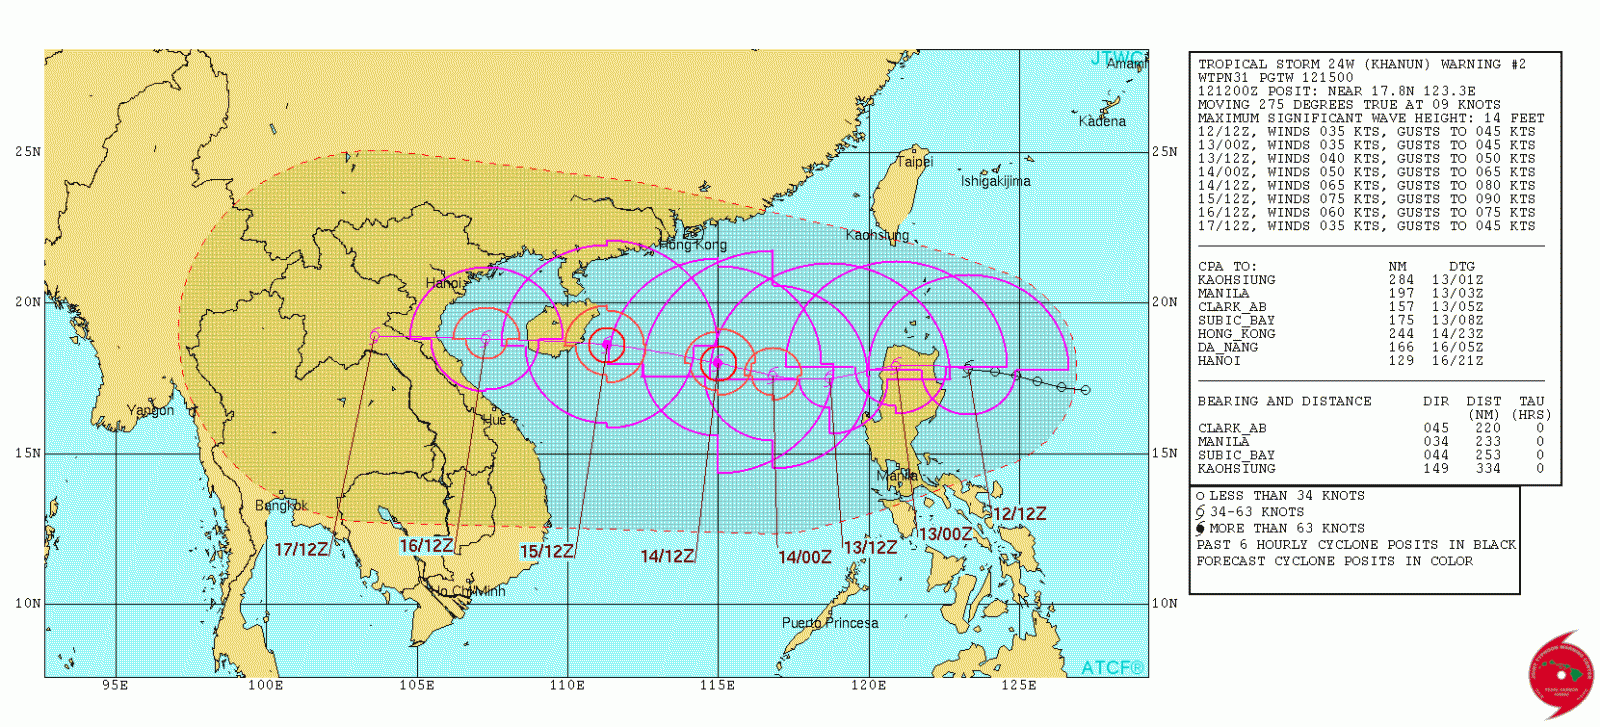 Tropical Storm Khanun JTWC forecast track October 12, 2017